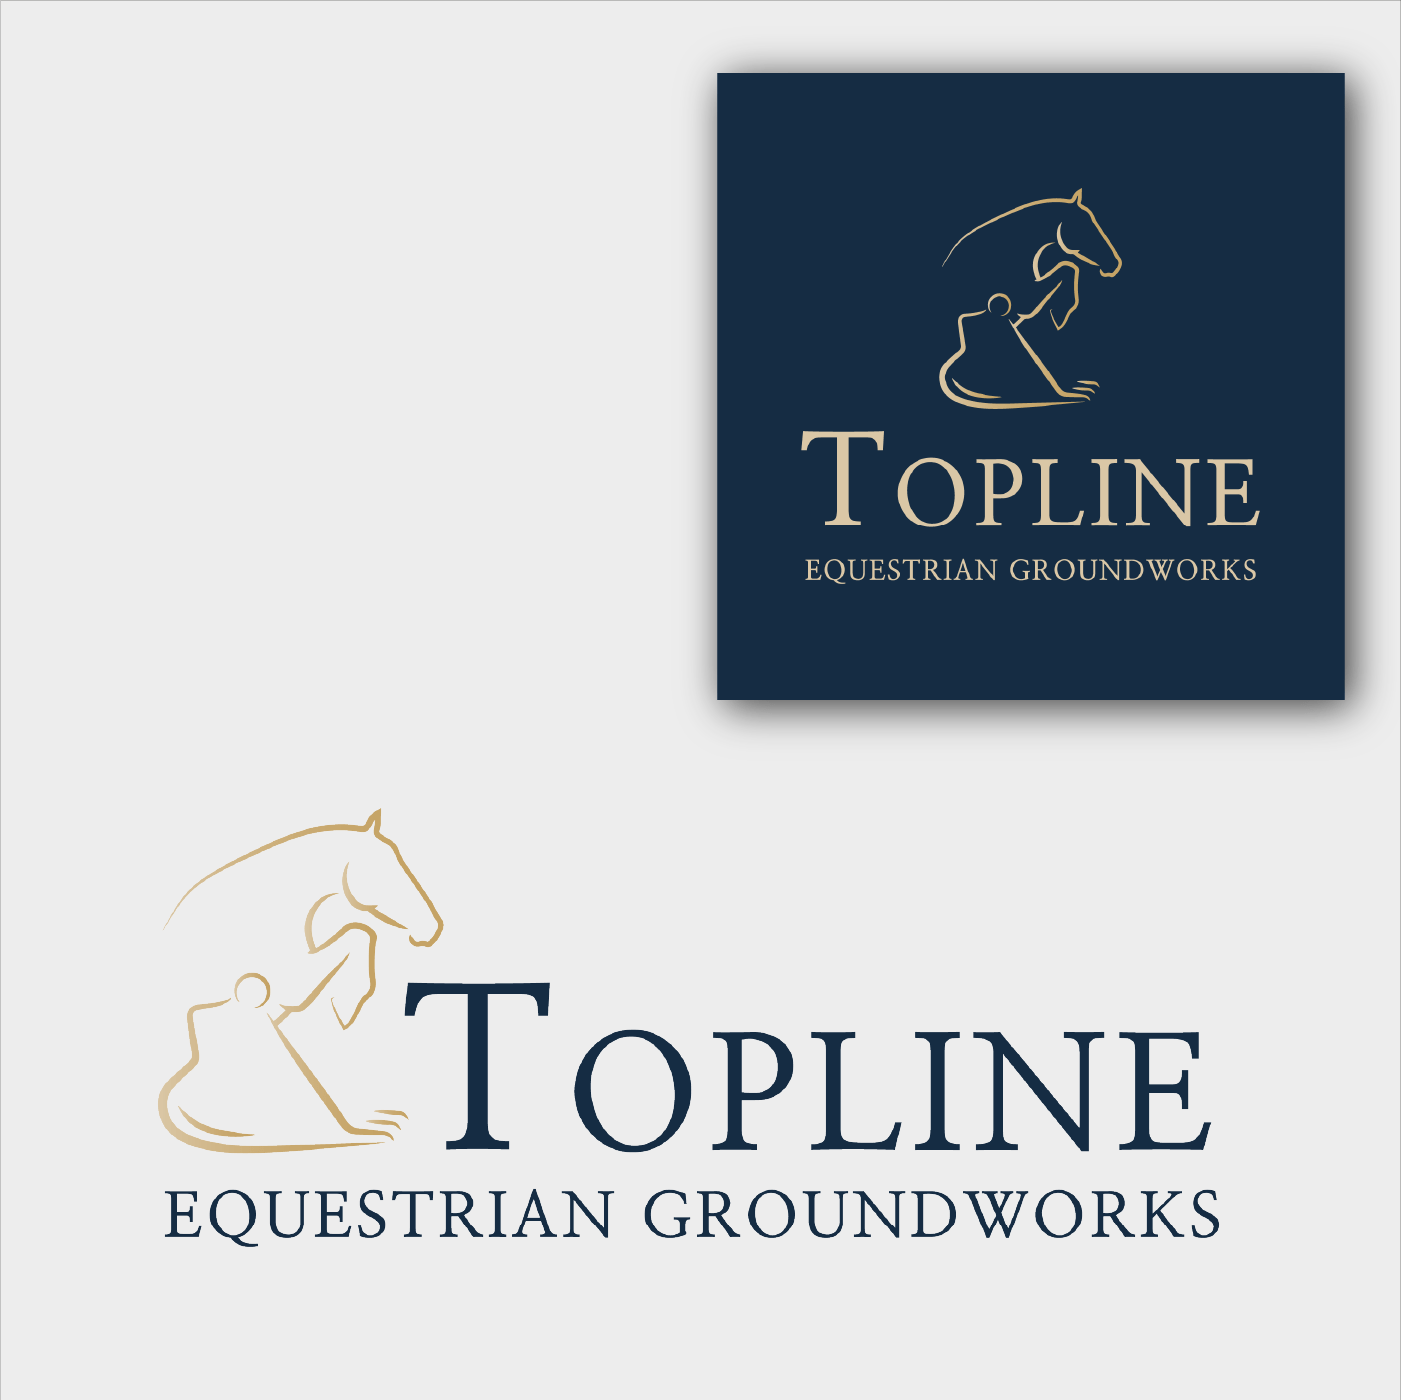 topline equestrian groundworks logo